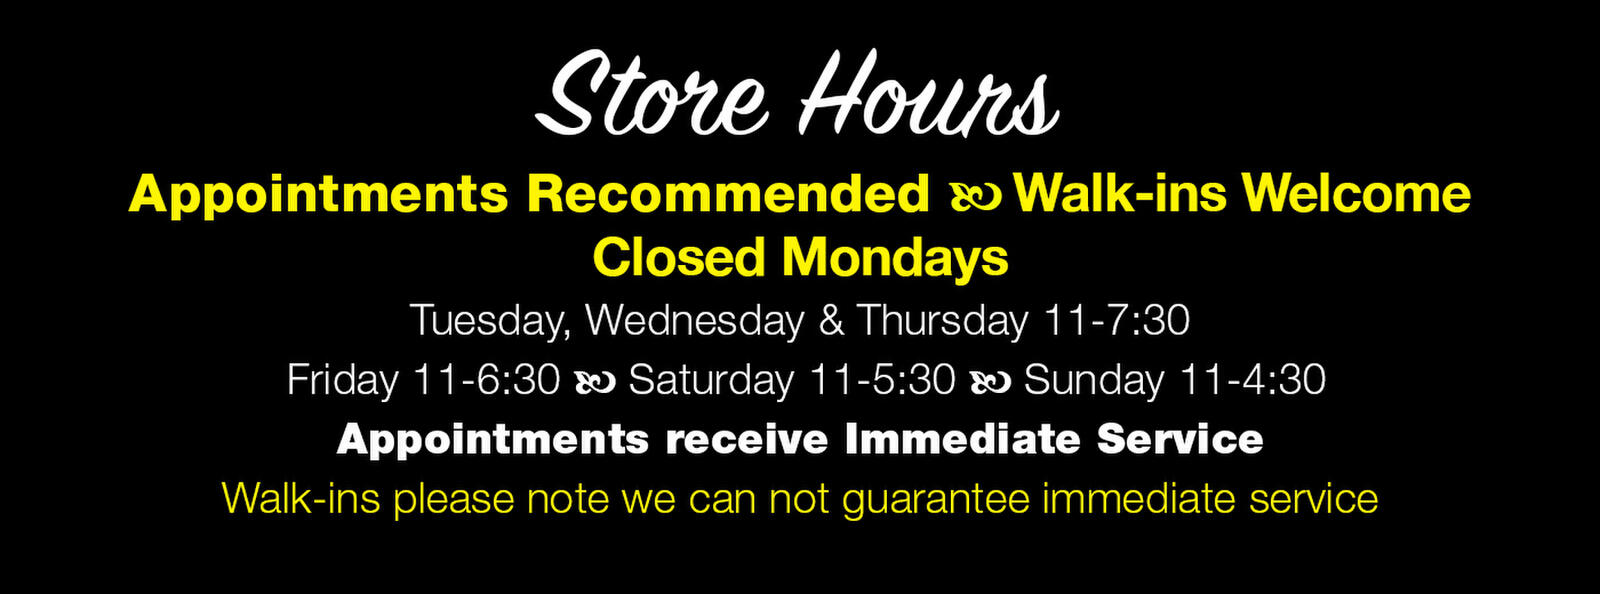 Closed Mondays, Tuesday thru Friday 11am - 7:30pm; Saturday 10am-5:30pm, Sunday 10am-4:30pm